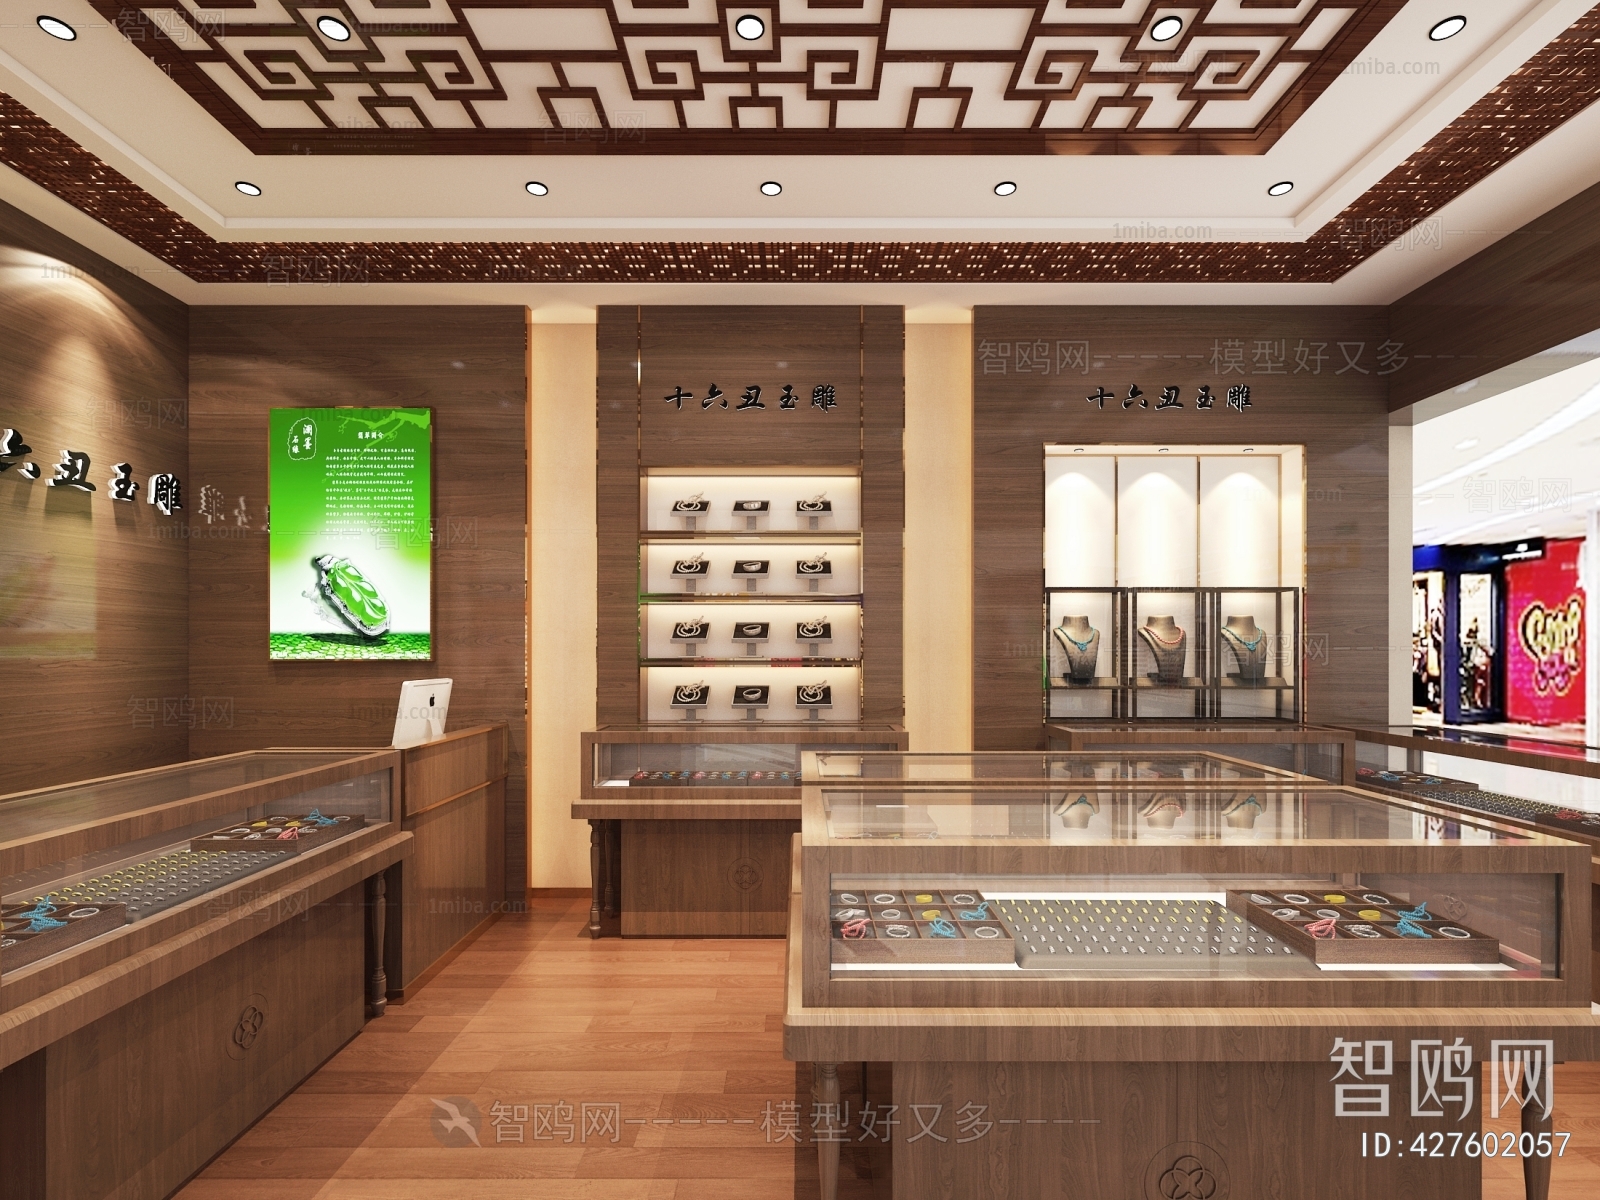 Chinese Style Jewelry Store